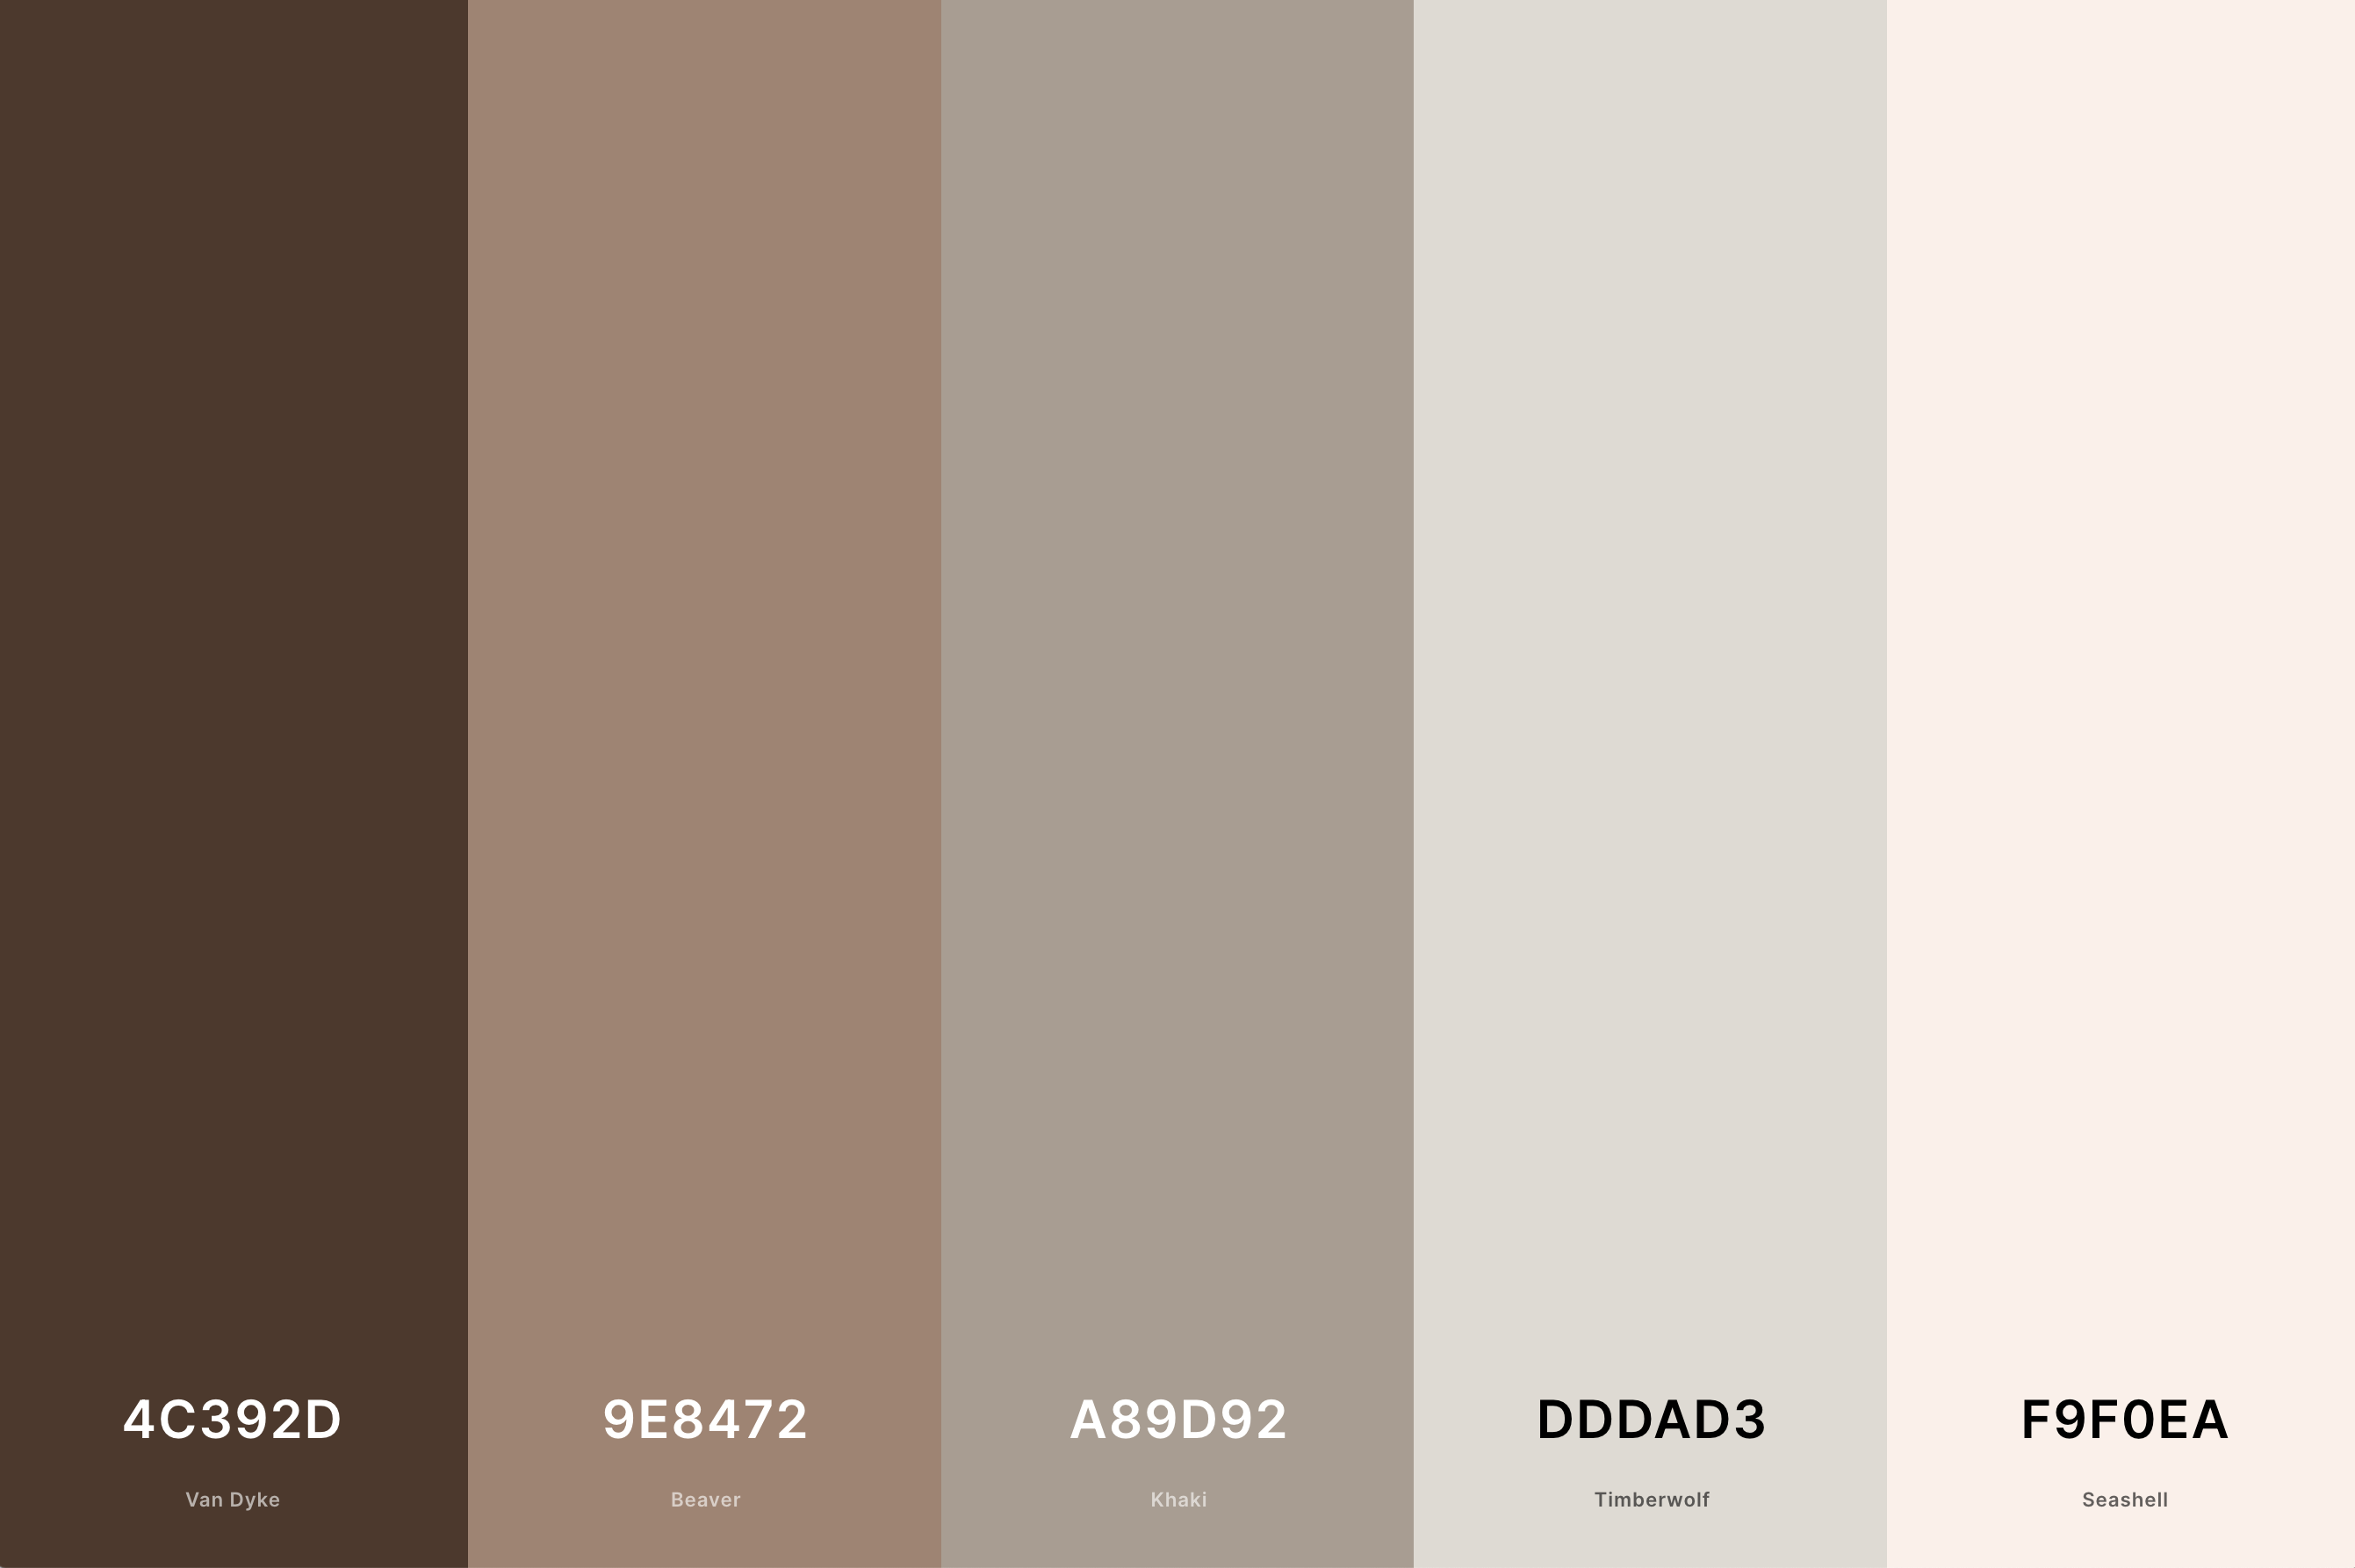 Neutral Brown Color Palette Color Palette with Van Dyke (Hex #4C392D) + Beaver (Hex #9E8472) + Khaki (Hex #A89D92) + Timberwolf (Hex #DDDAD3) + Seashell (Hex #F9F0EA) Color Palette with Hex Codes